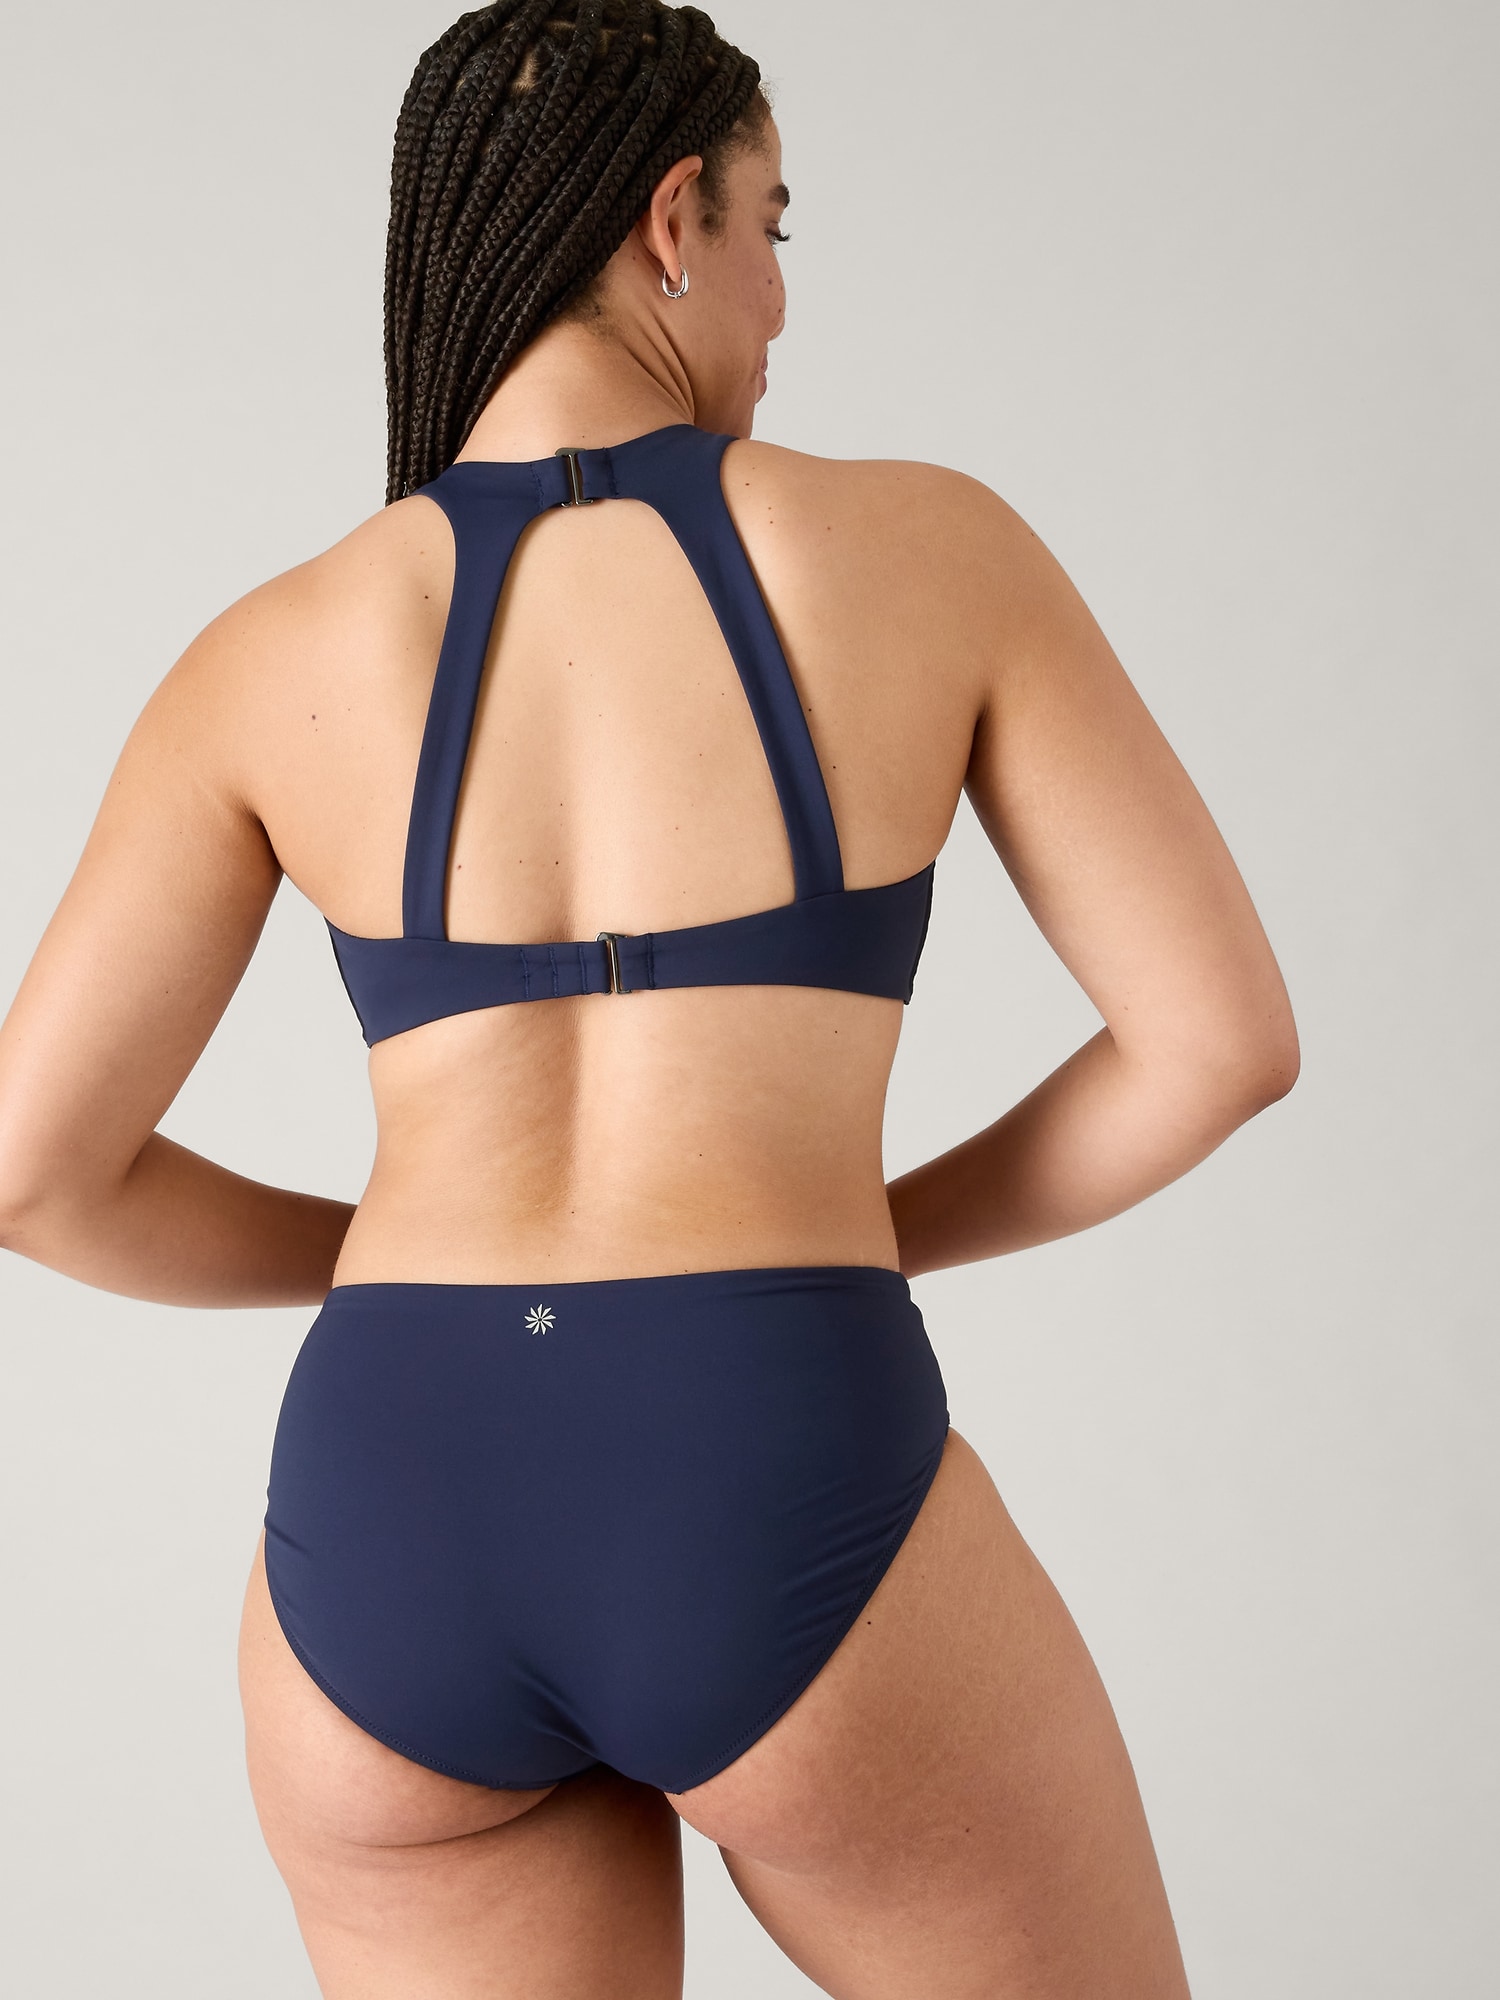 Women's Underwire Flared Tankini from Custom Swimwear by Exelnt